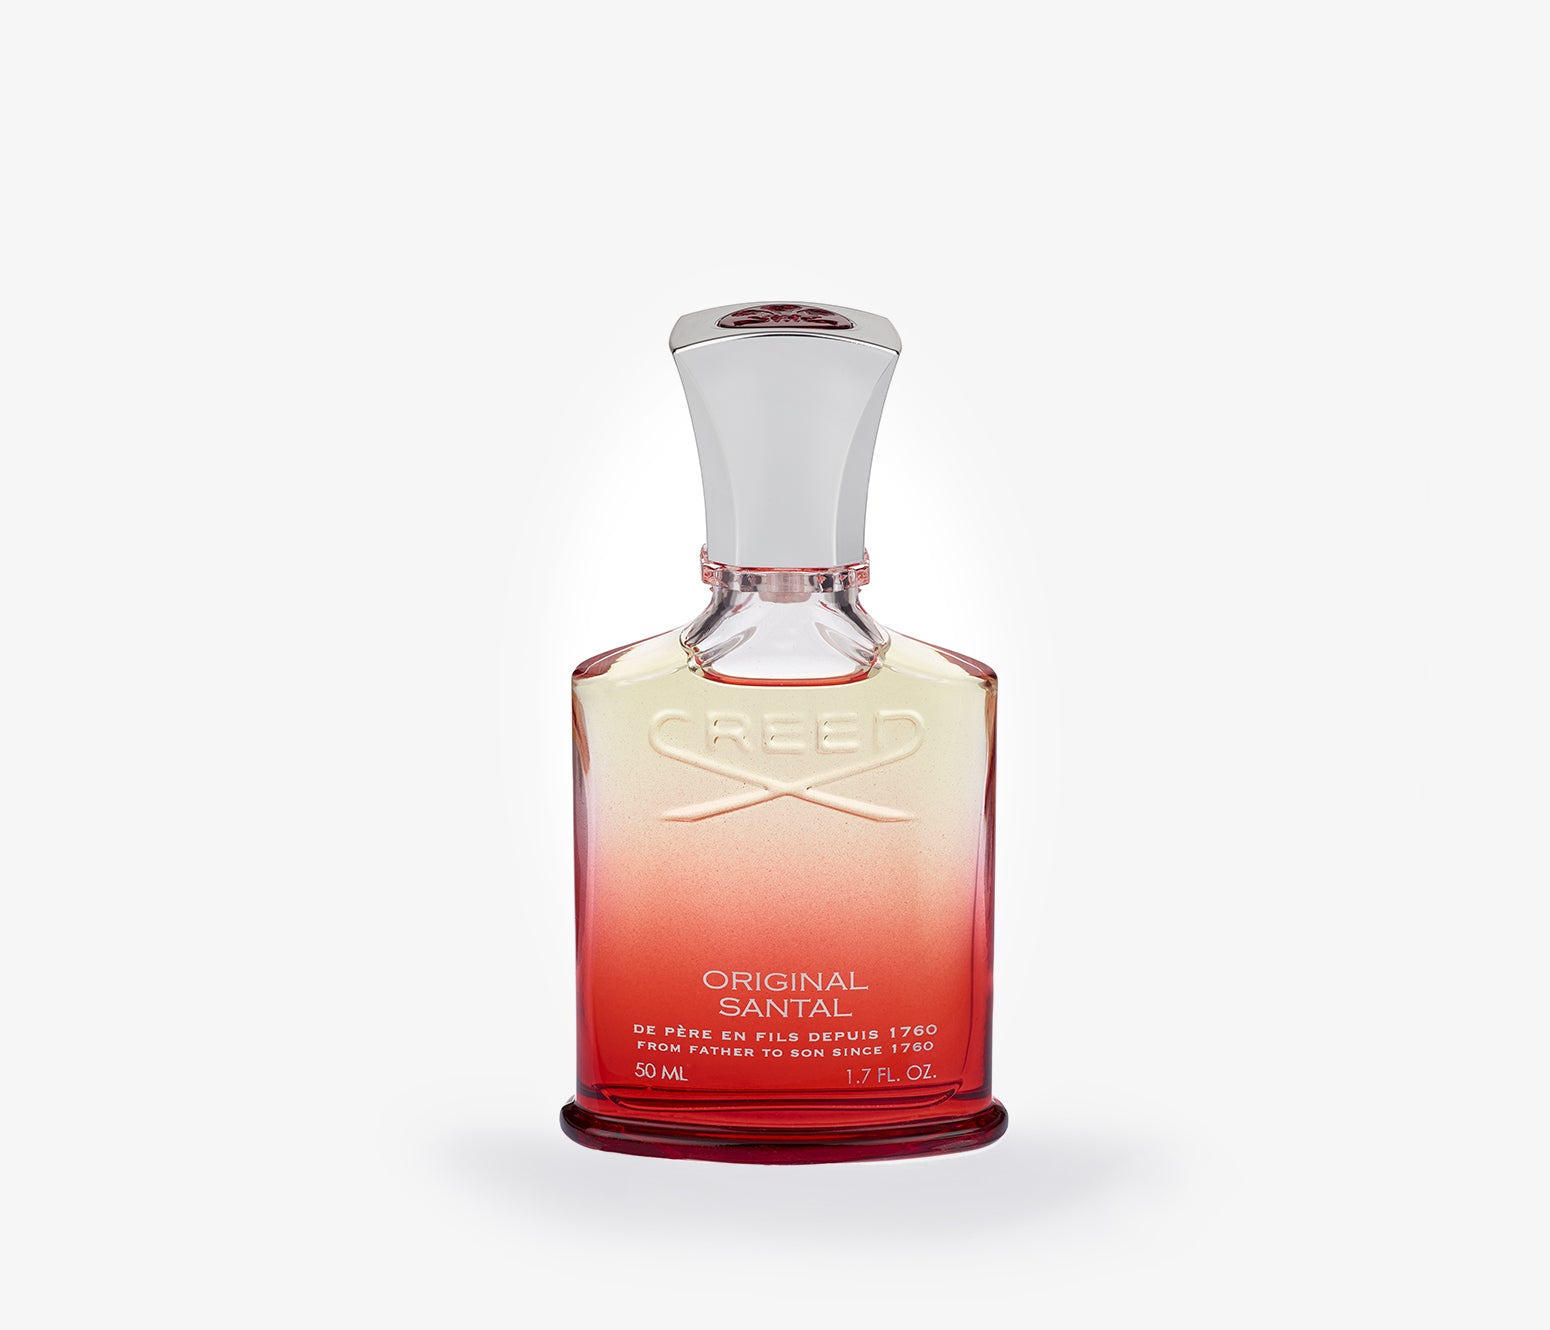 Creed - Original Santal - 100ml - XWE001 - product image - Fragrance - Les Senteurs